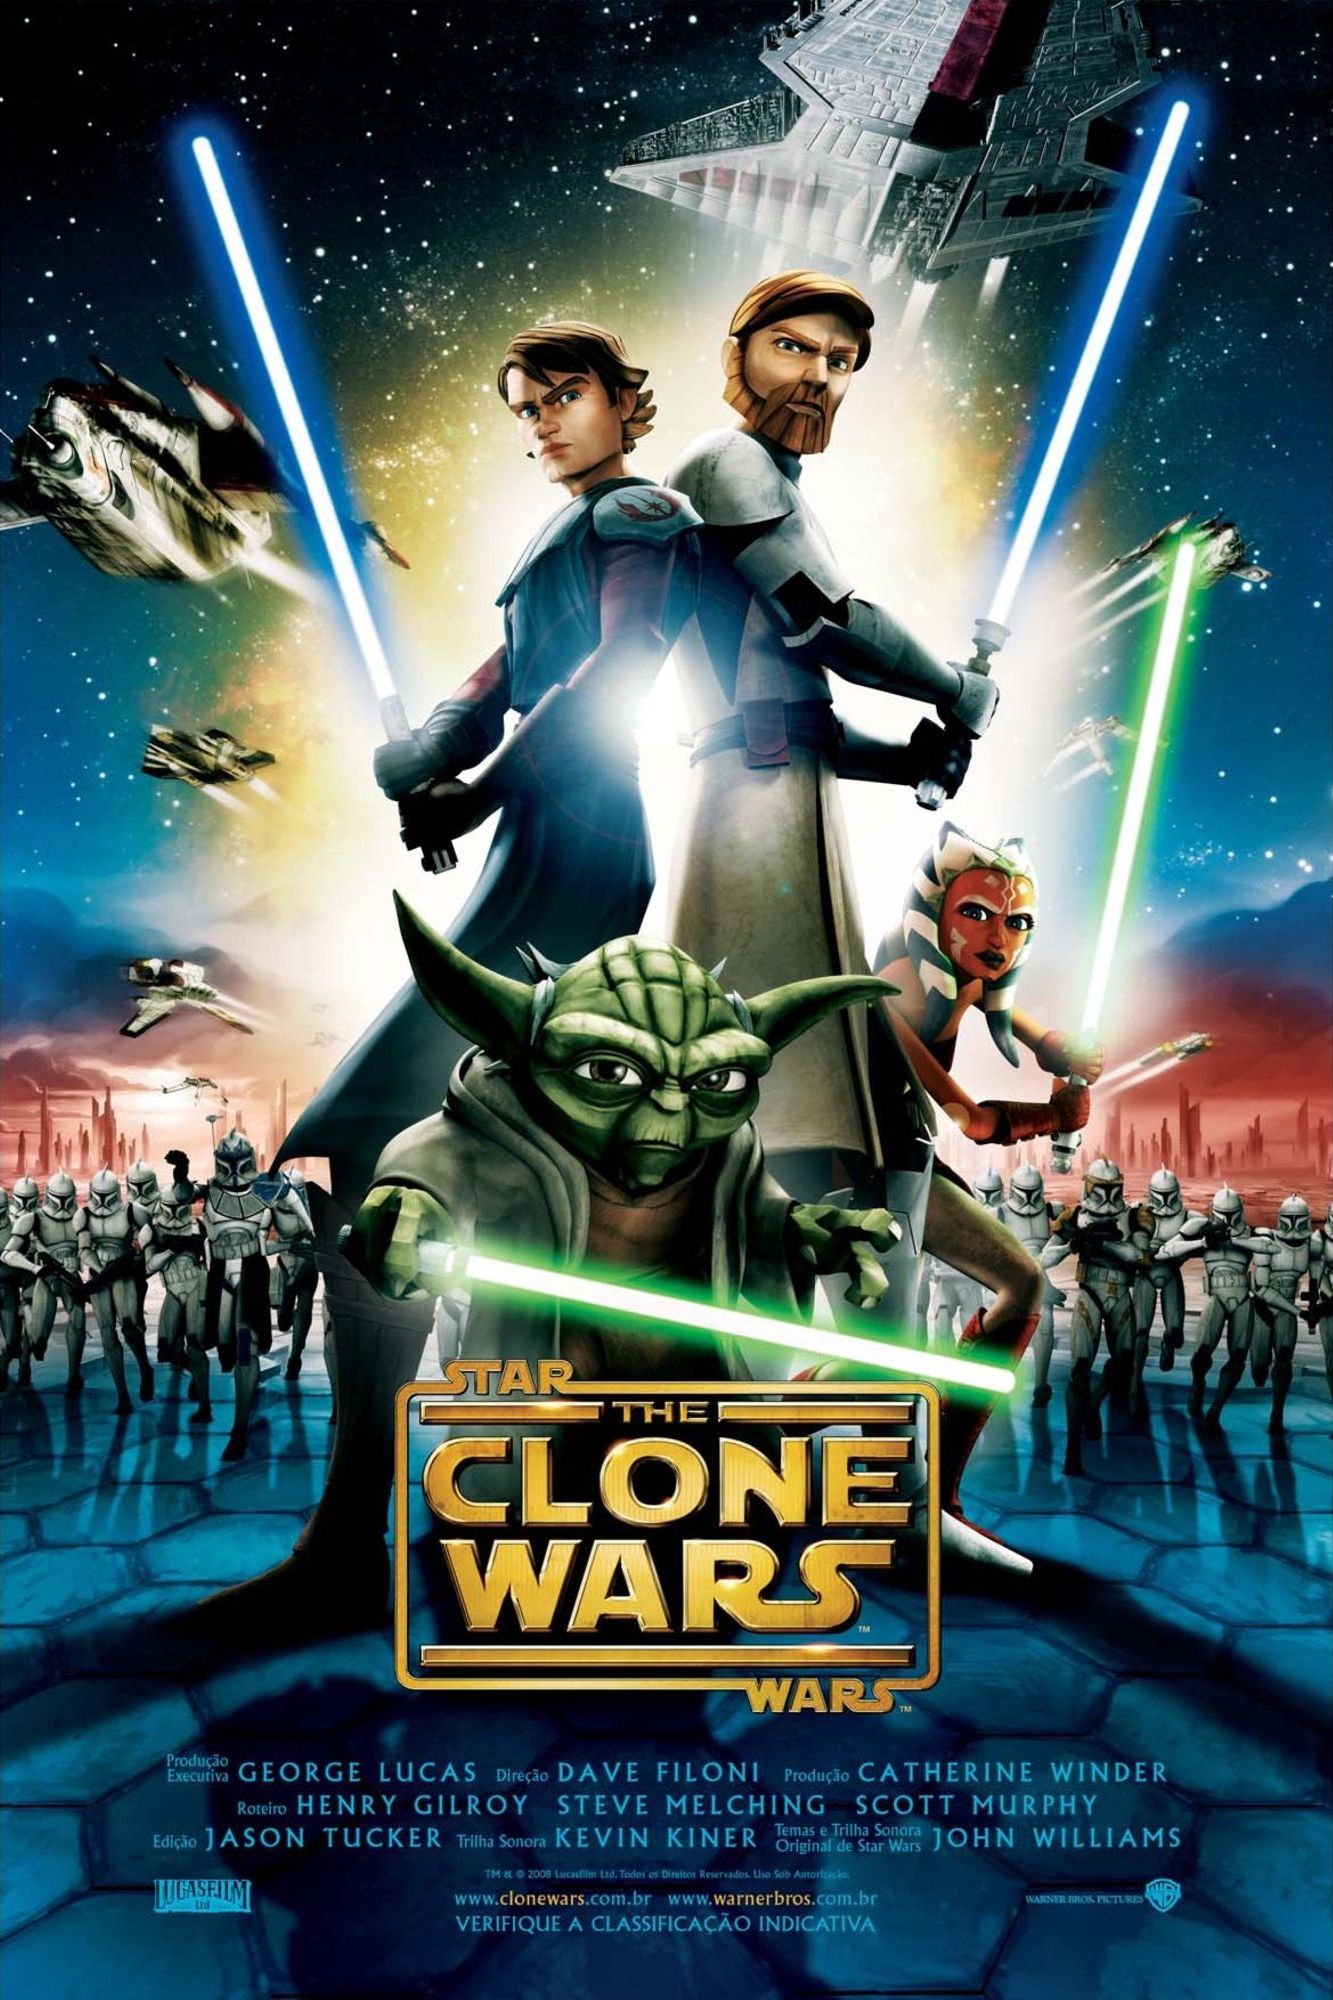 Star Wars The Clone Wars Film Poster